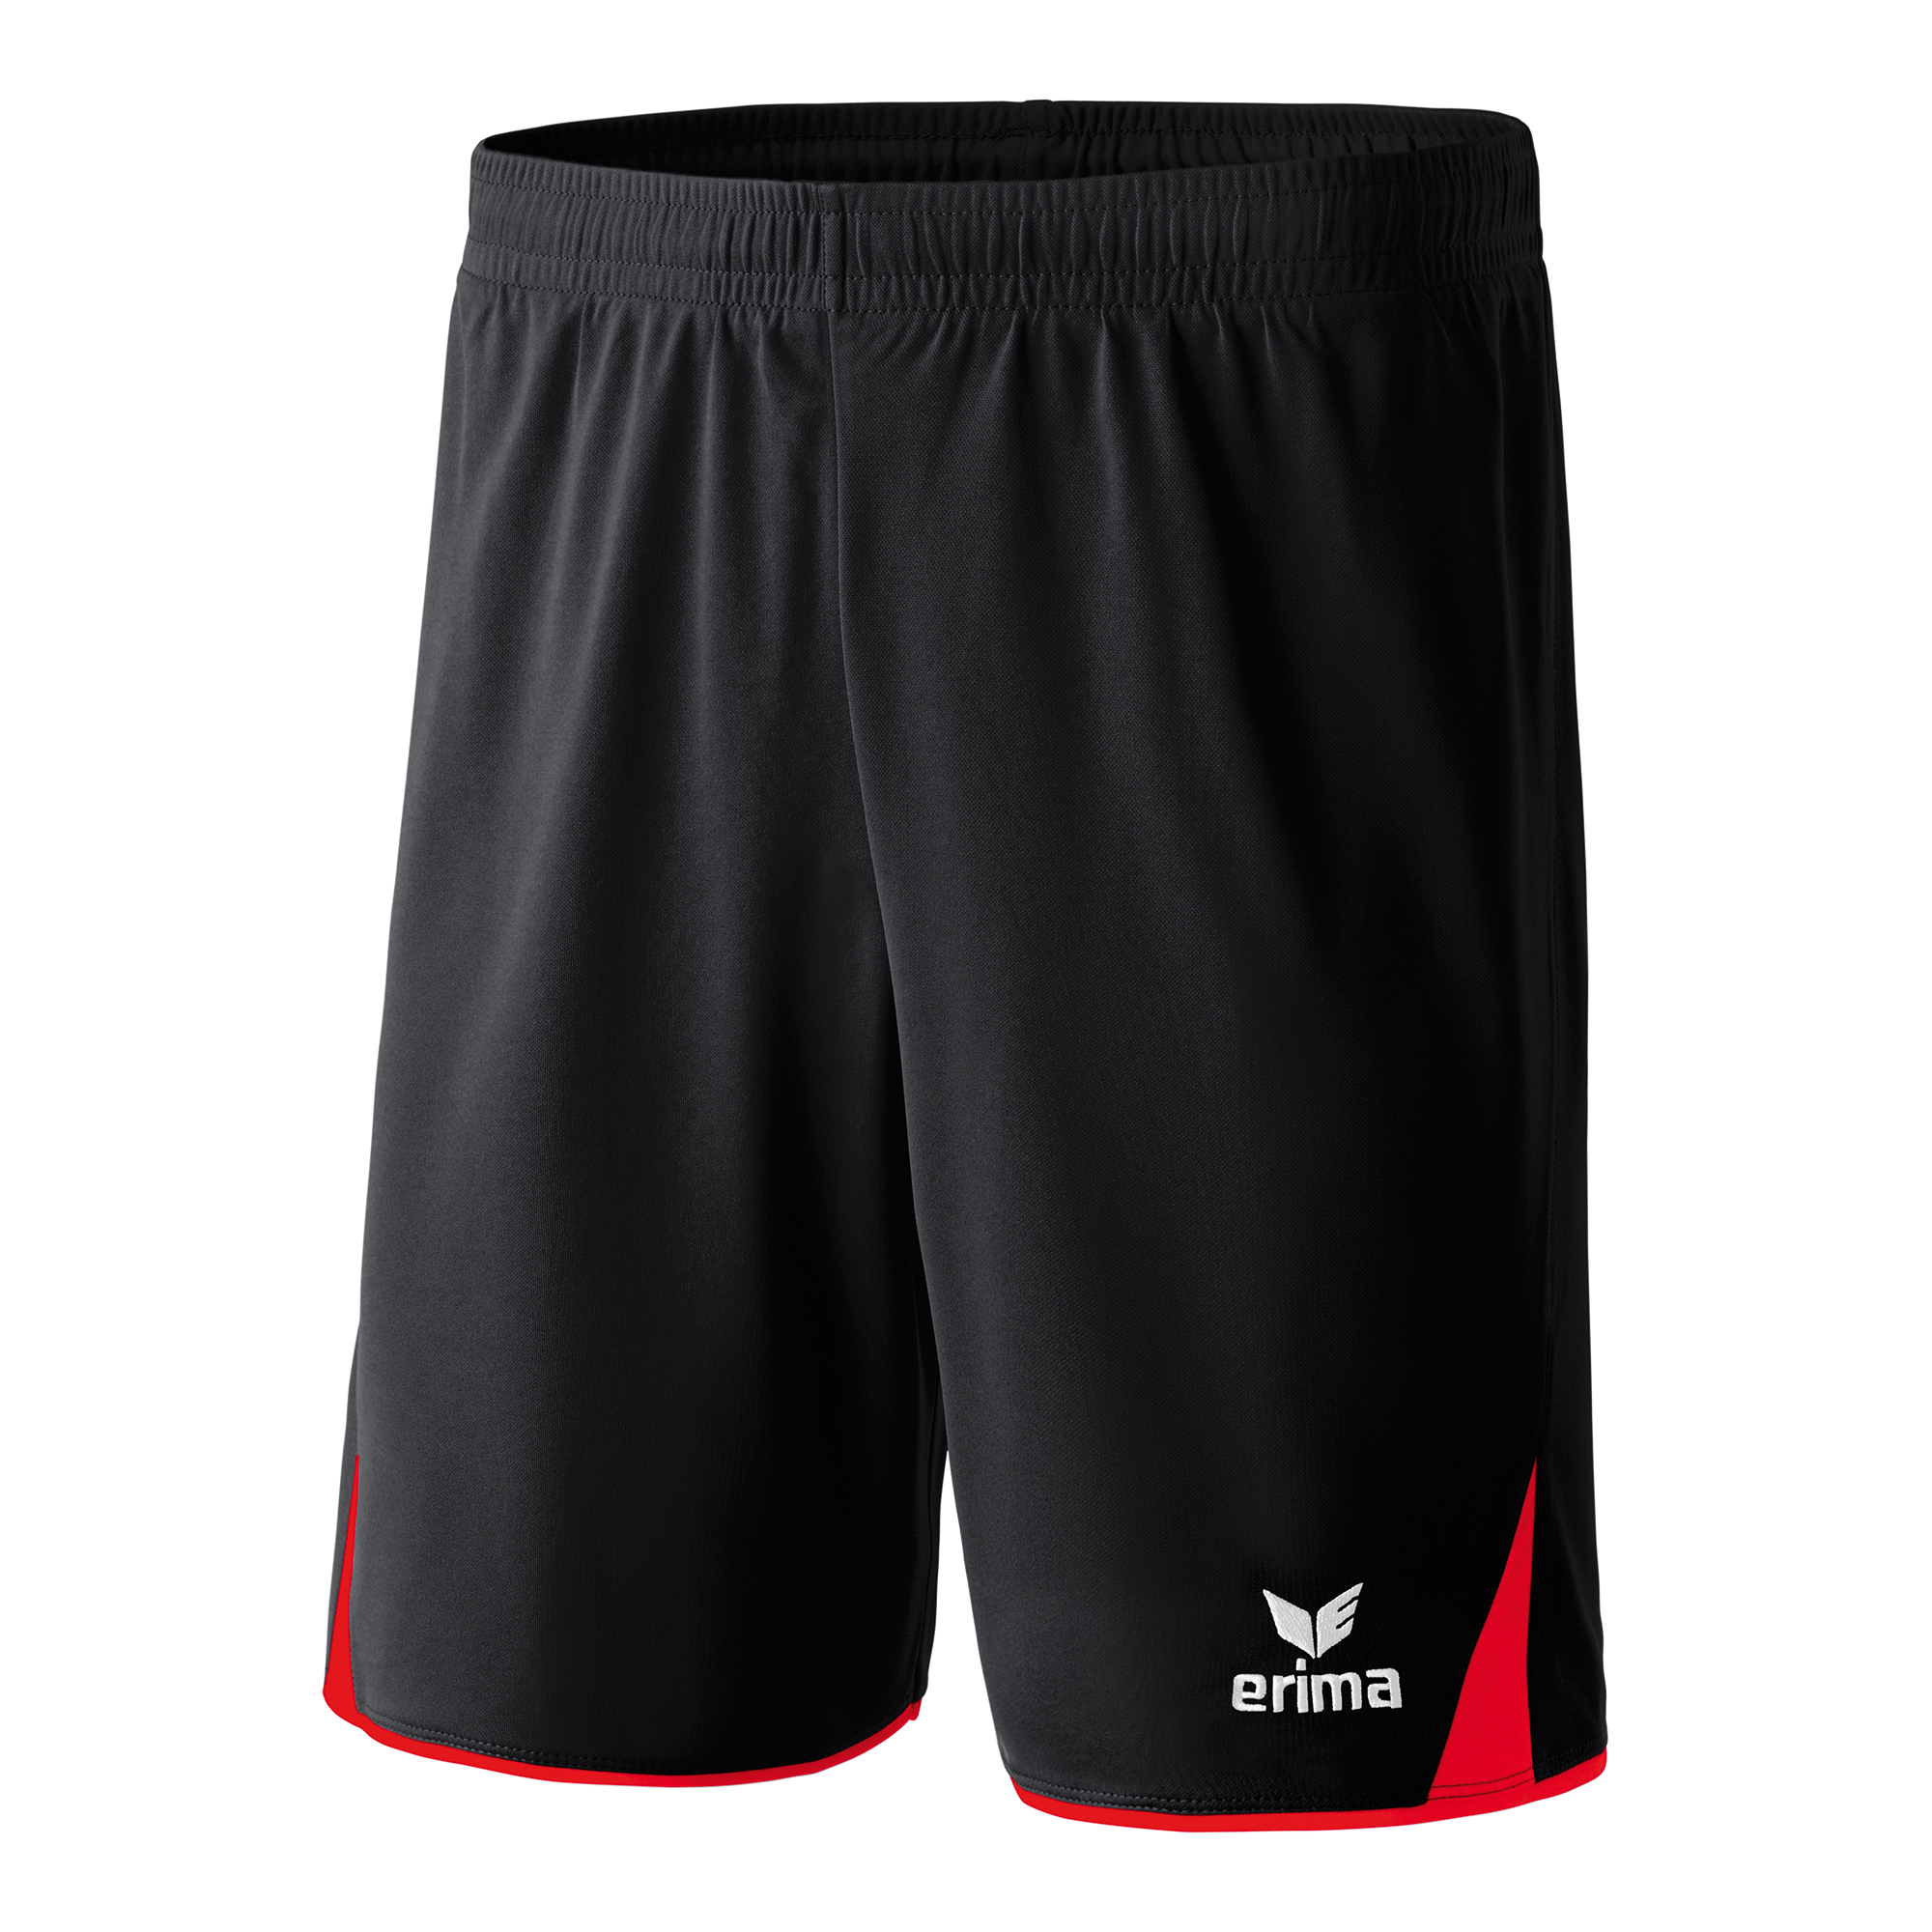 Erima 5-Cubes Shorts